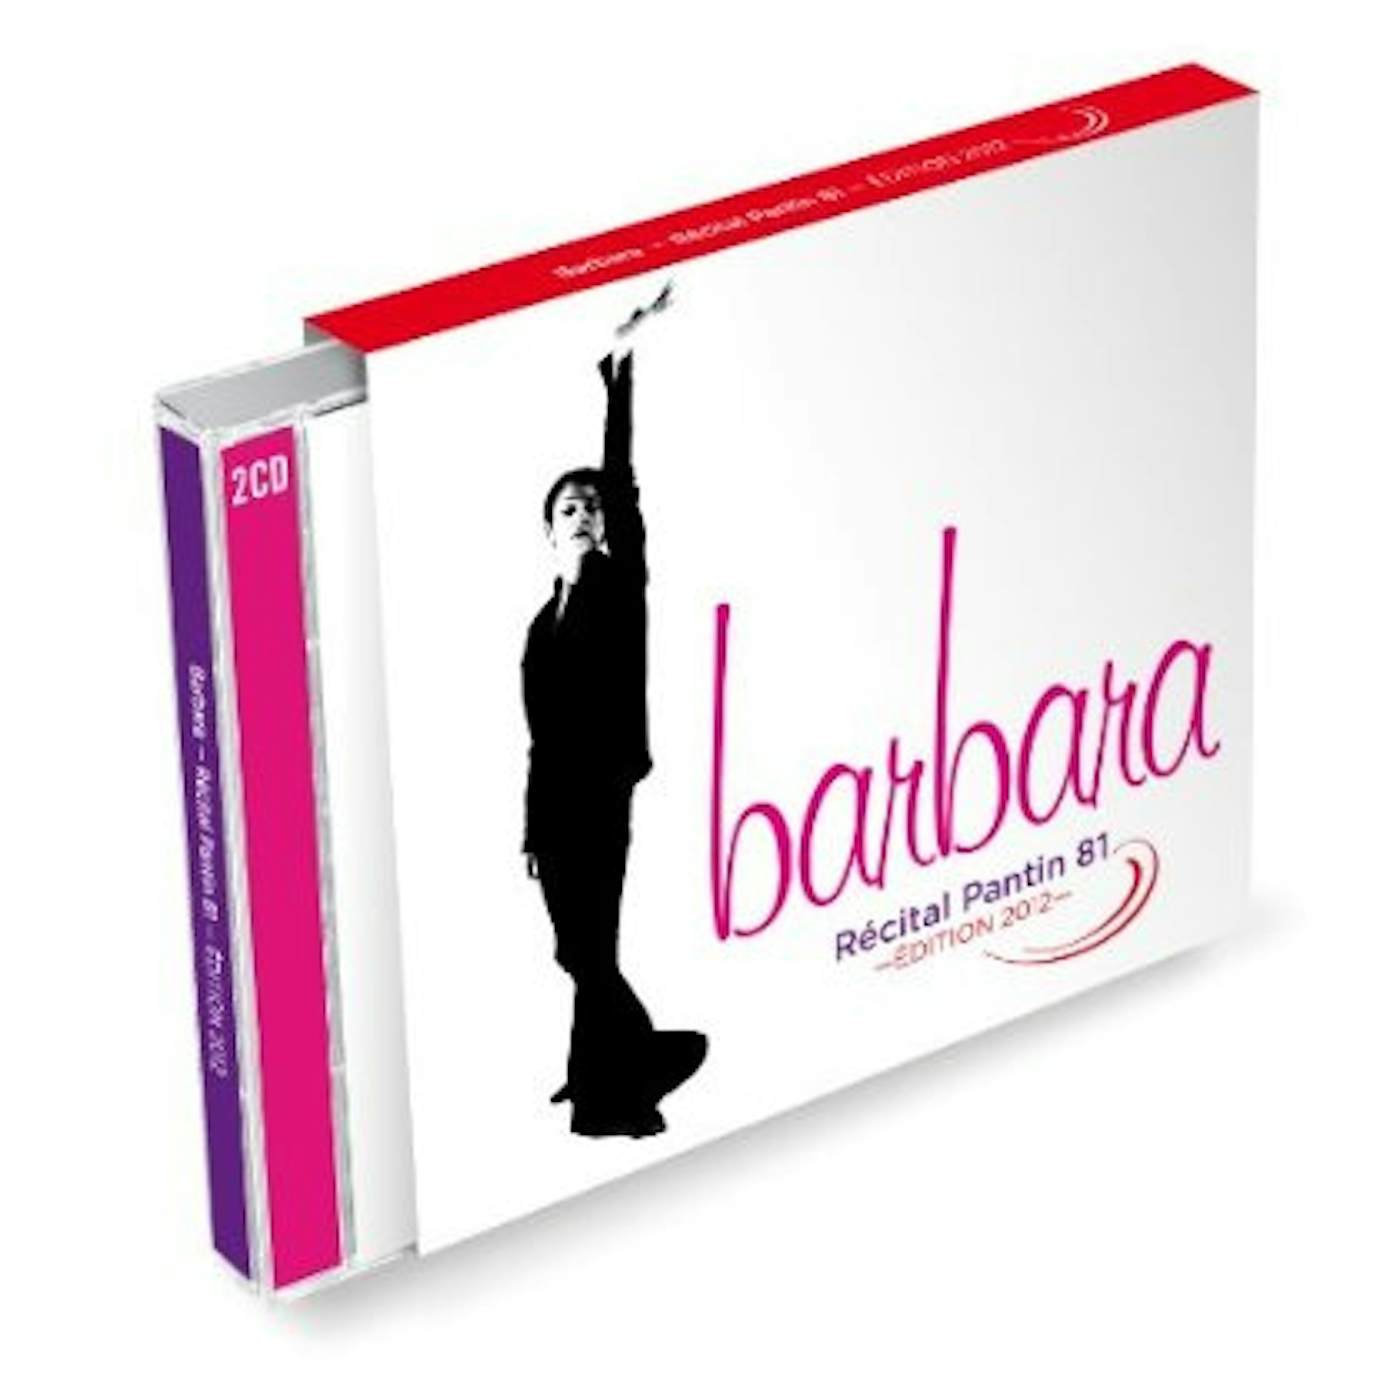 Barbara RECITAL PANTIN 81 CD